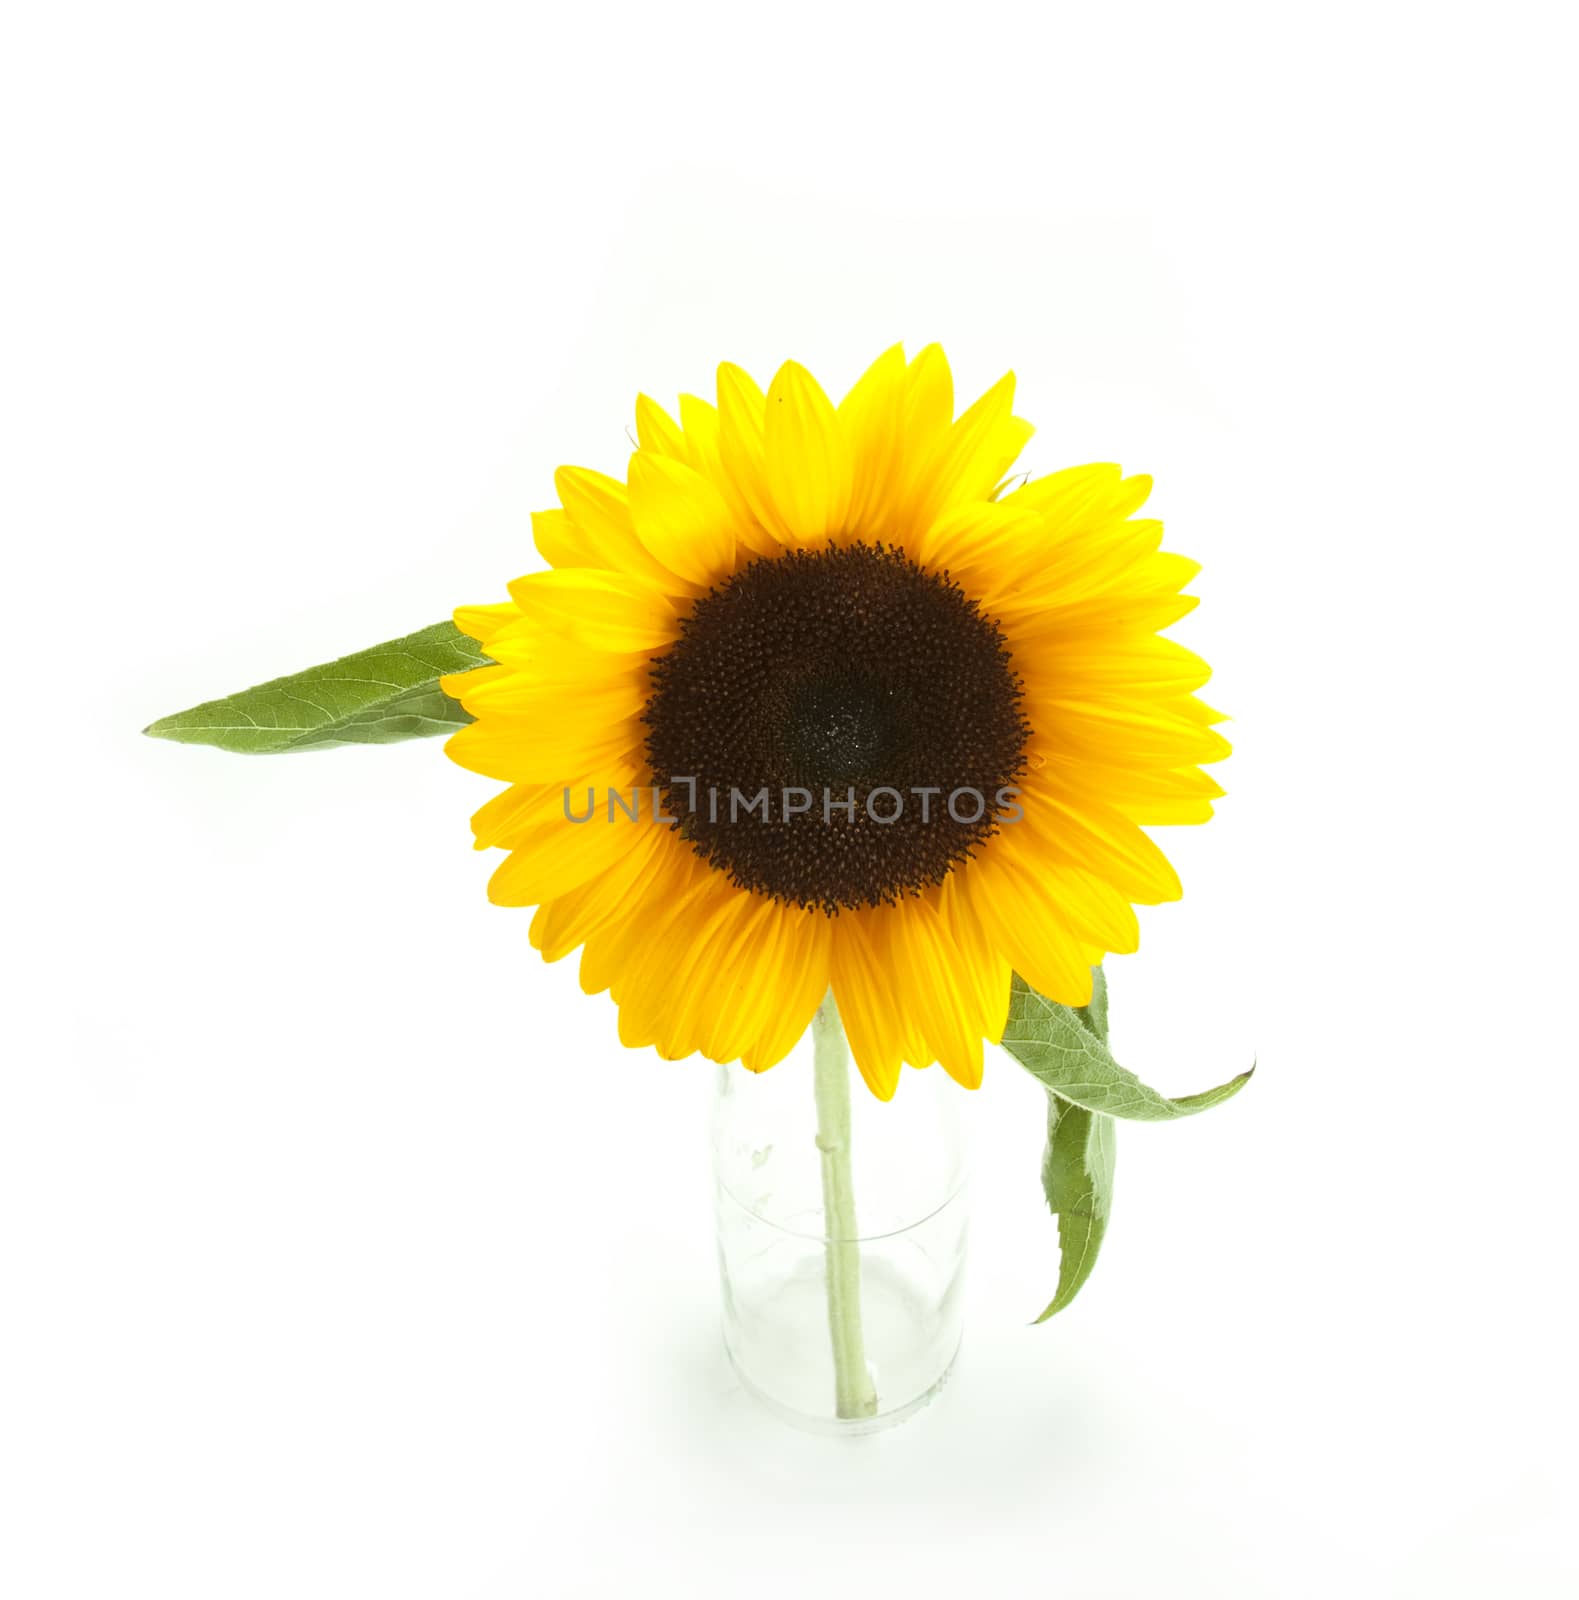 Yellow sunflower by Portokalis